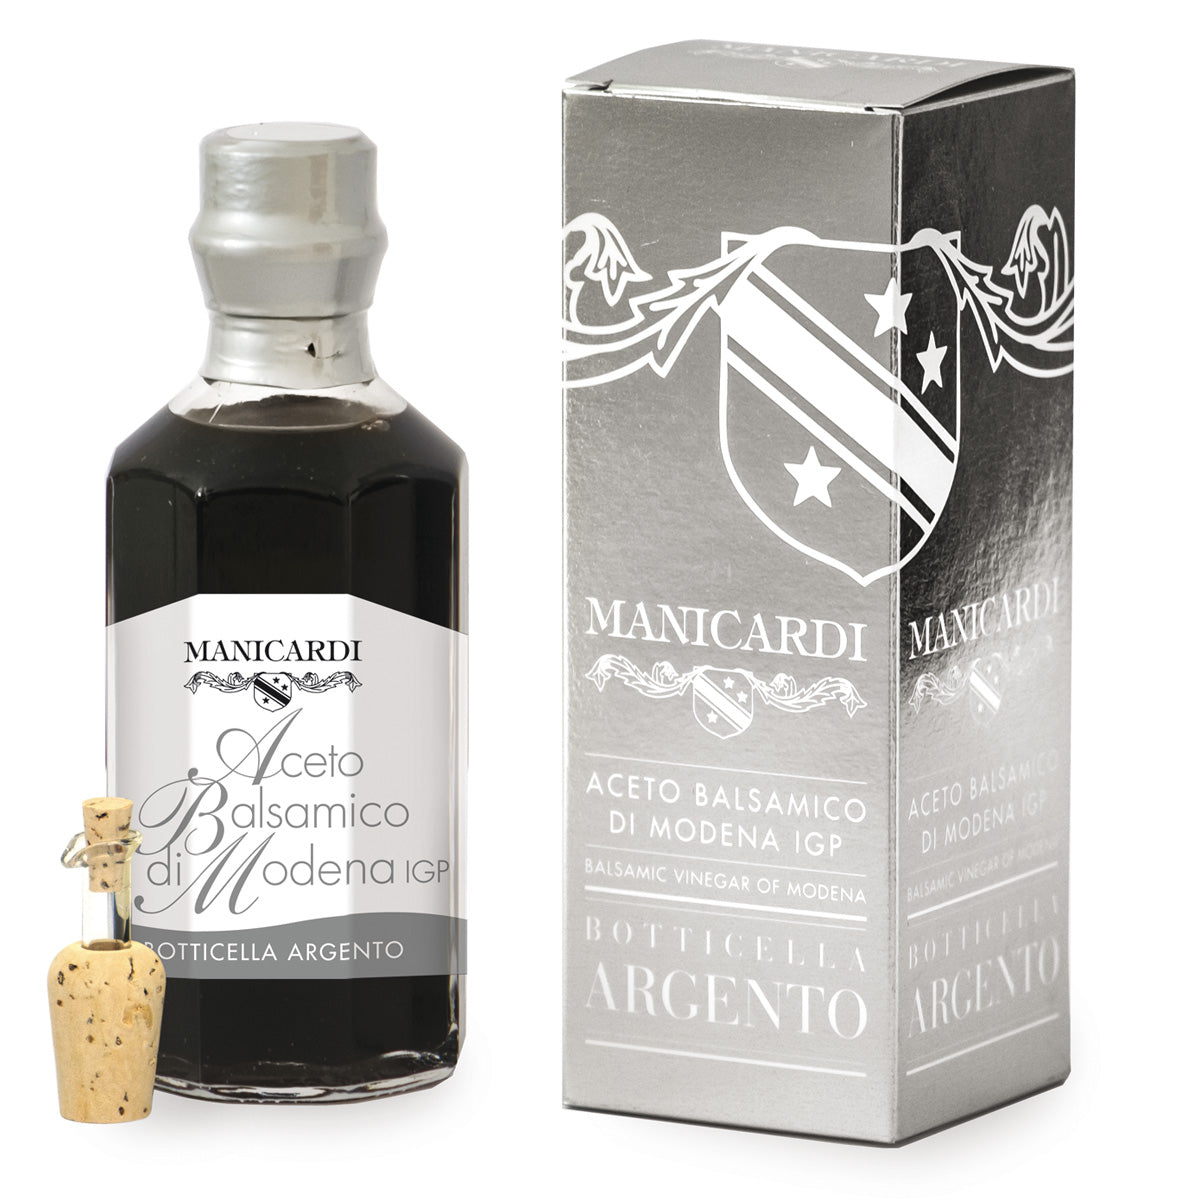 Manicardi Boticella Argento 22 Balsamic Vinegar MAN-001